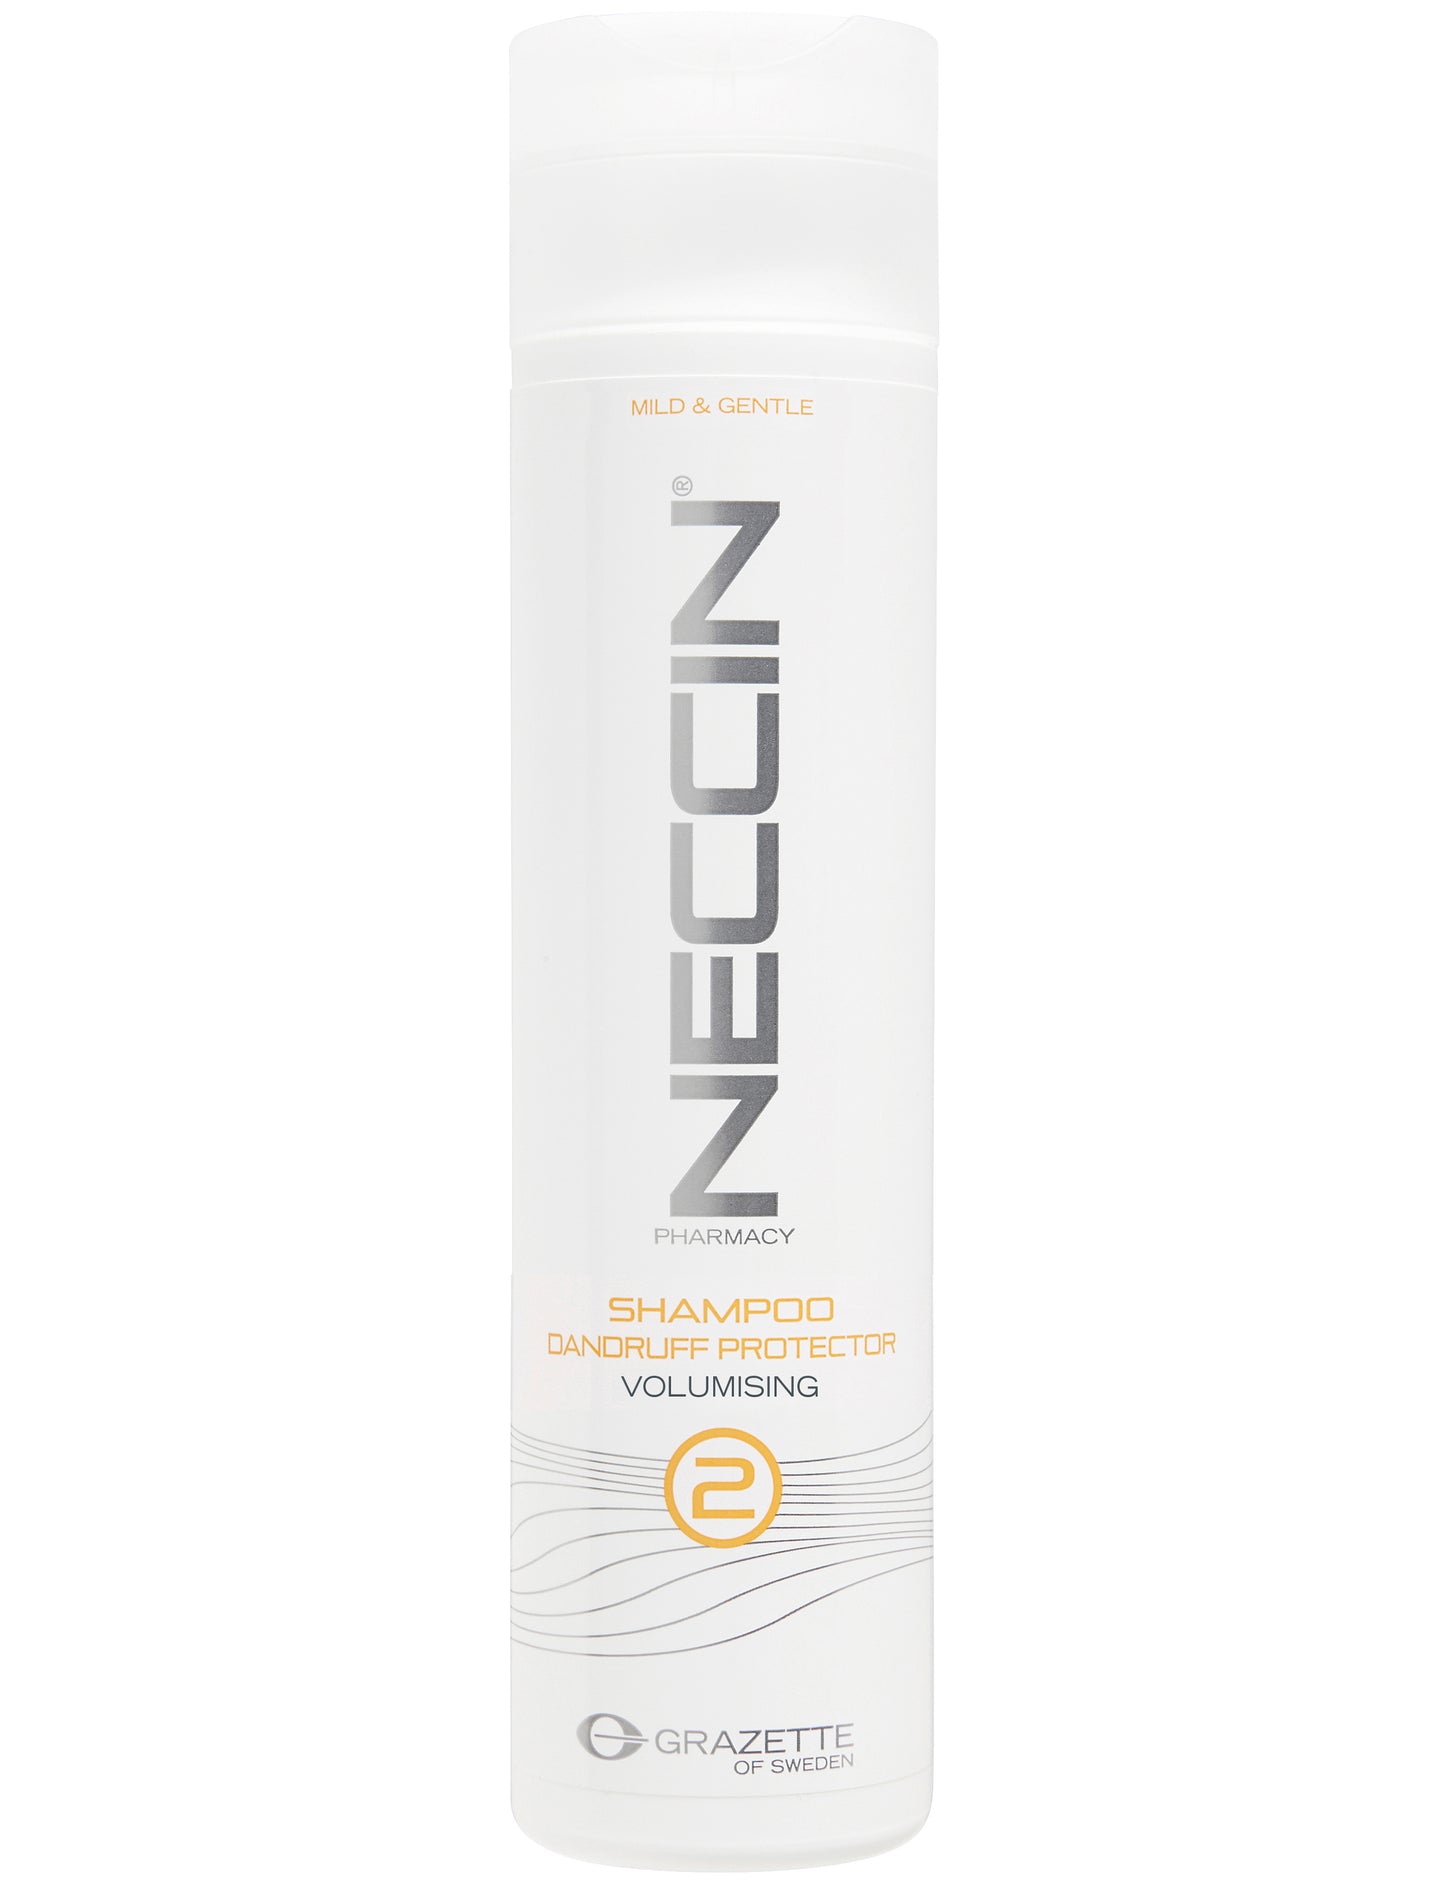 Neccin 2 Dandruff Protector Shampoo 250ml